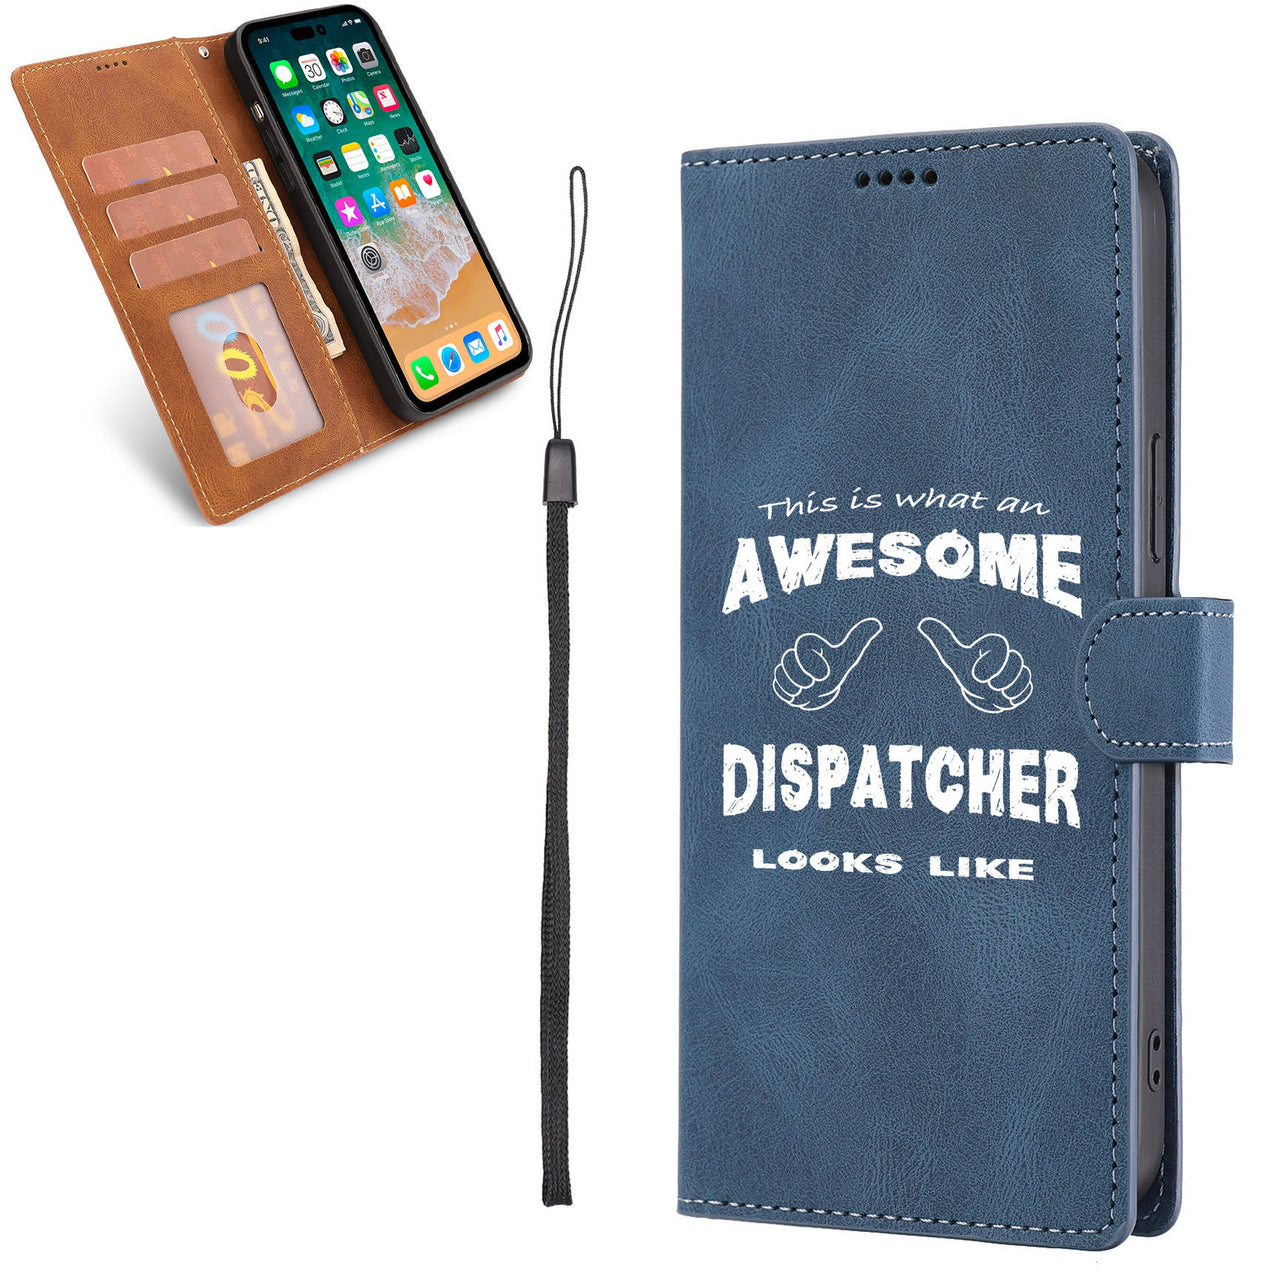 Dispatcher Designed Leather iPhone Cases